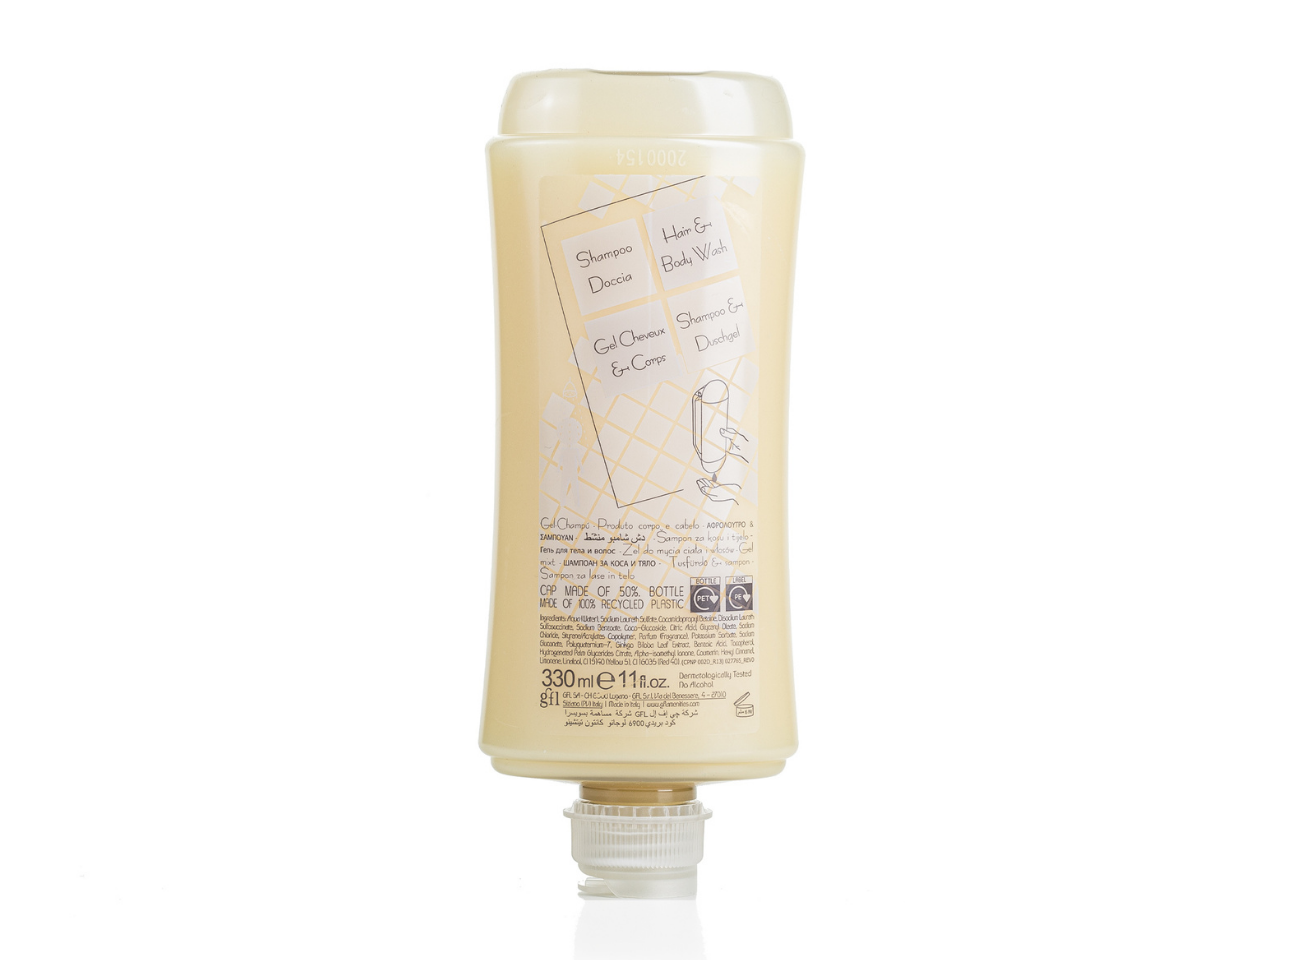 Linea Neutra Shampoo und Duschgel - Squeeze Spenderflasche 330 ml aus recyceltem PET